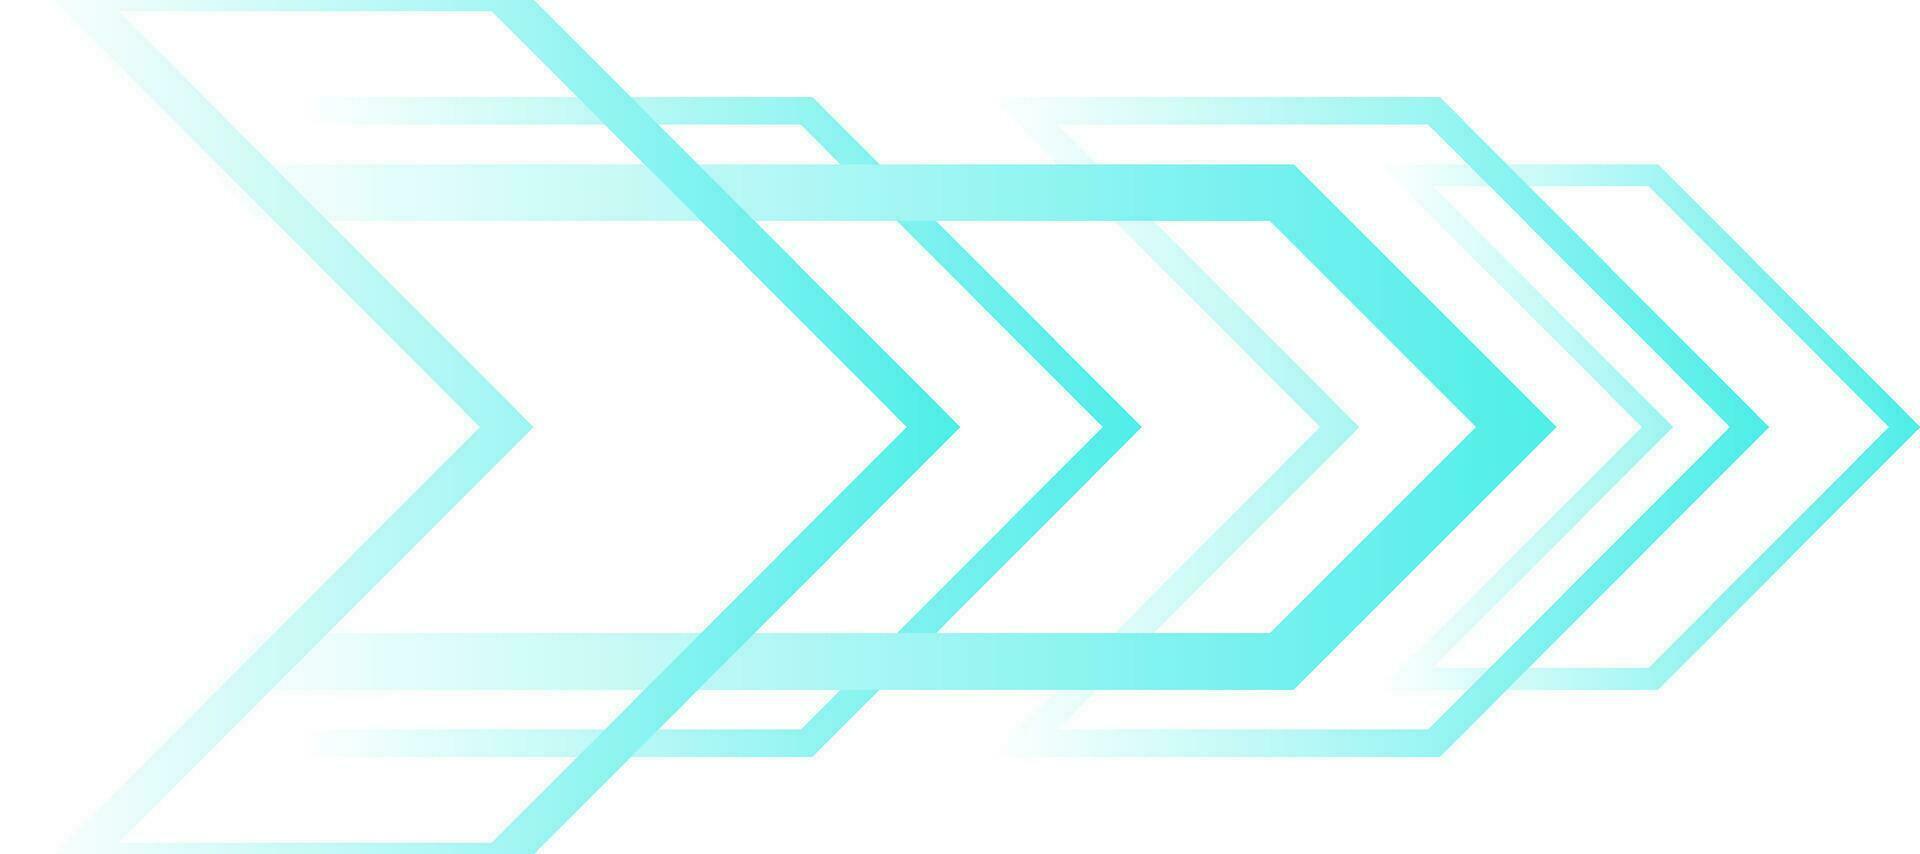 techno arrow light blue lines gradient futuristic background vector